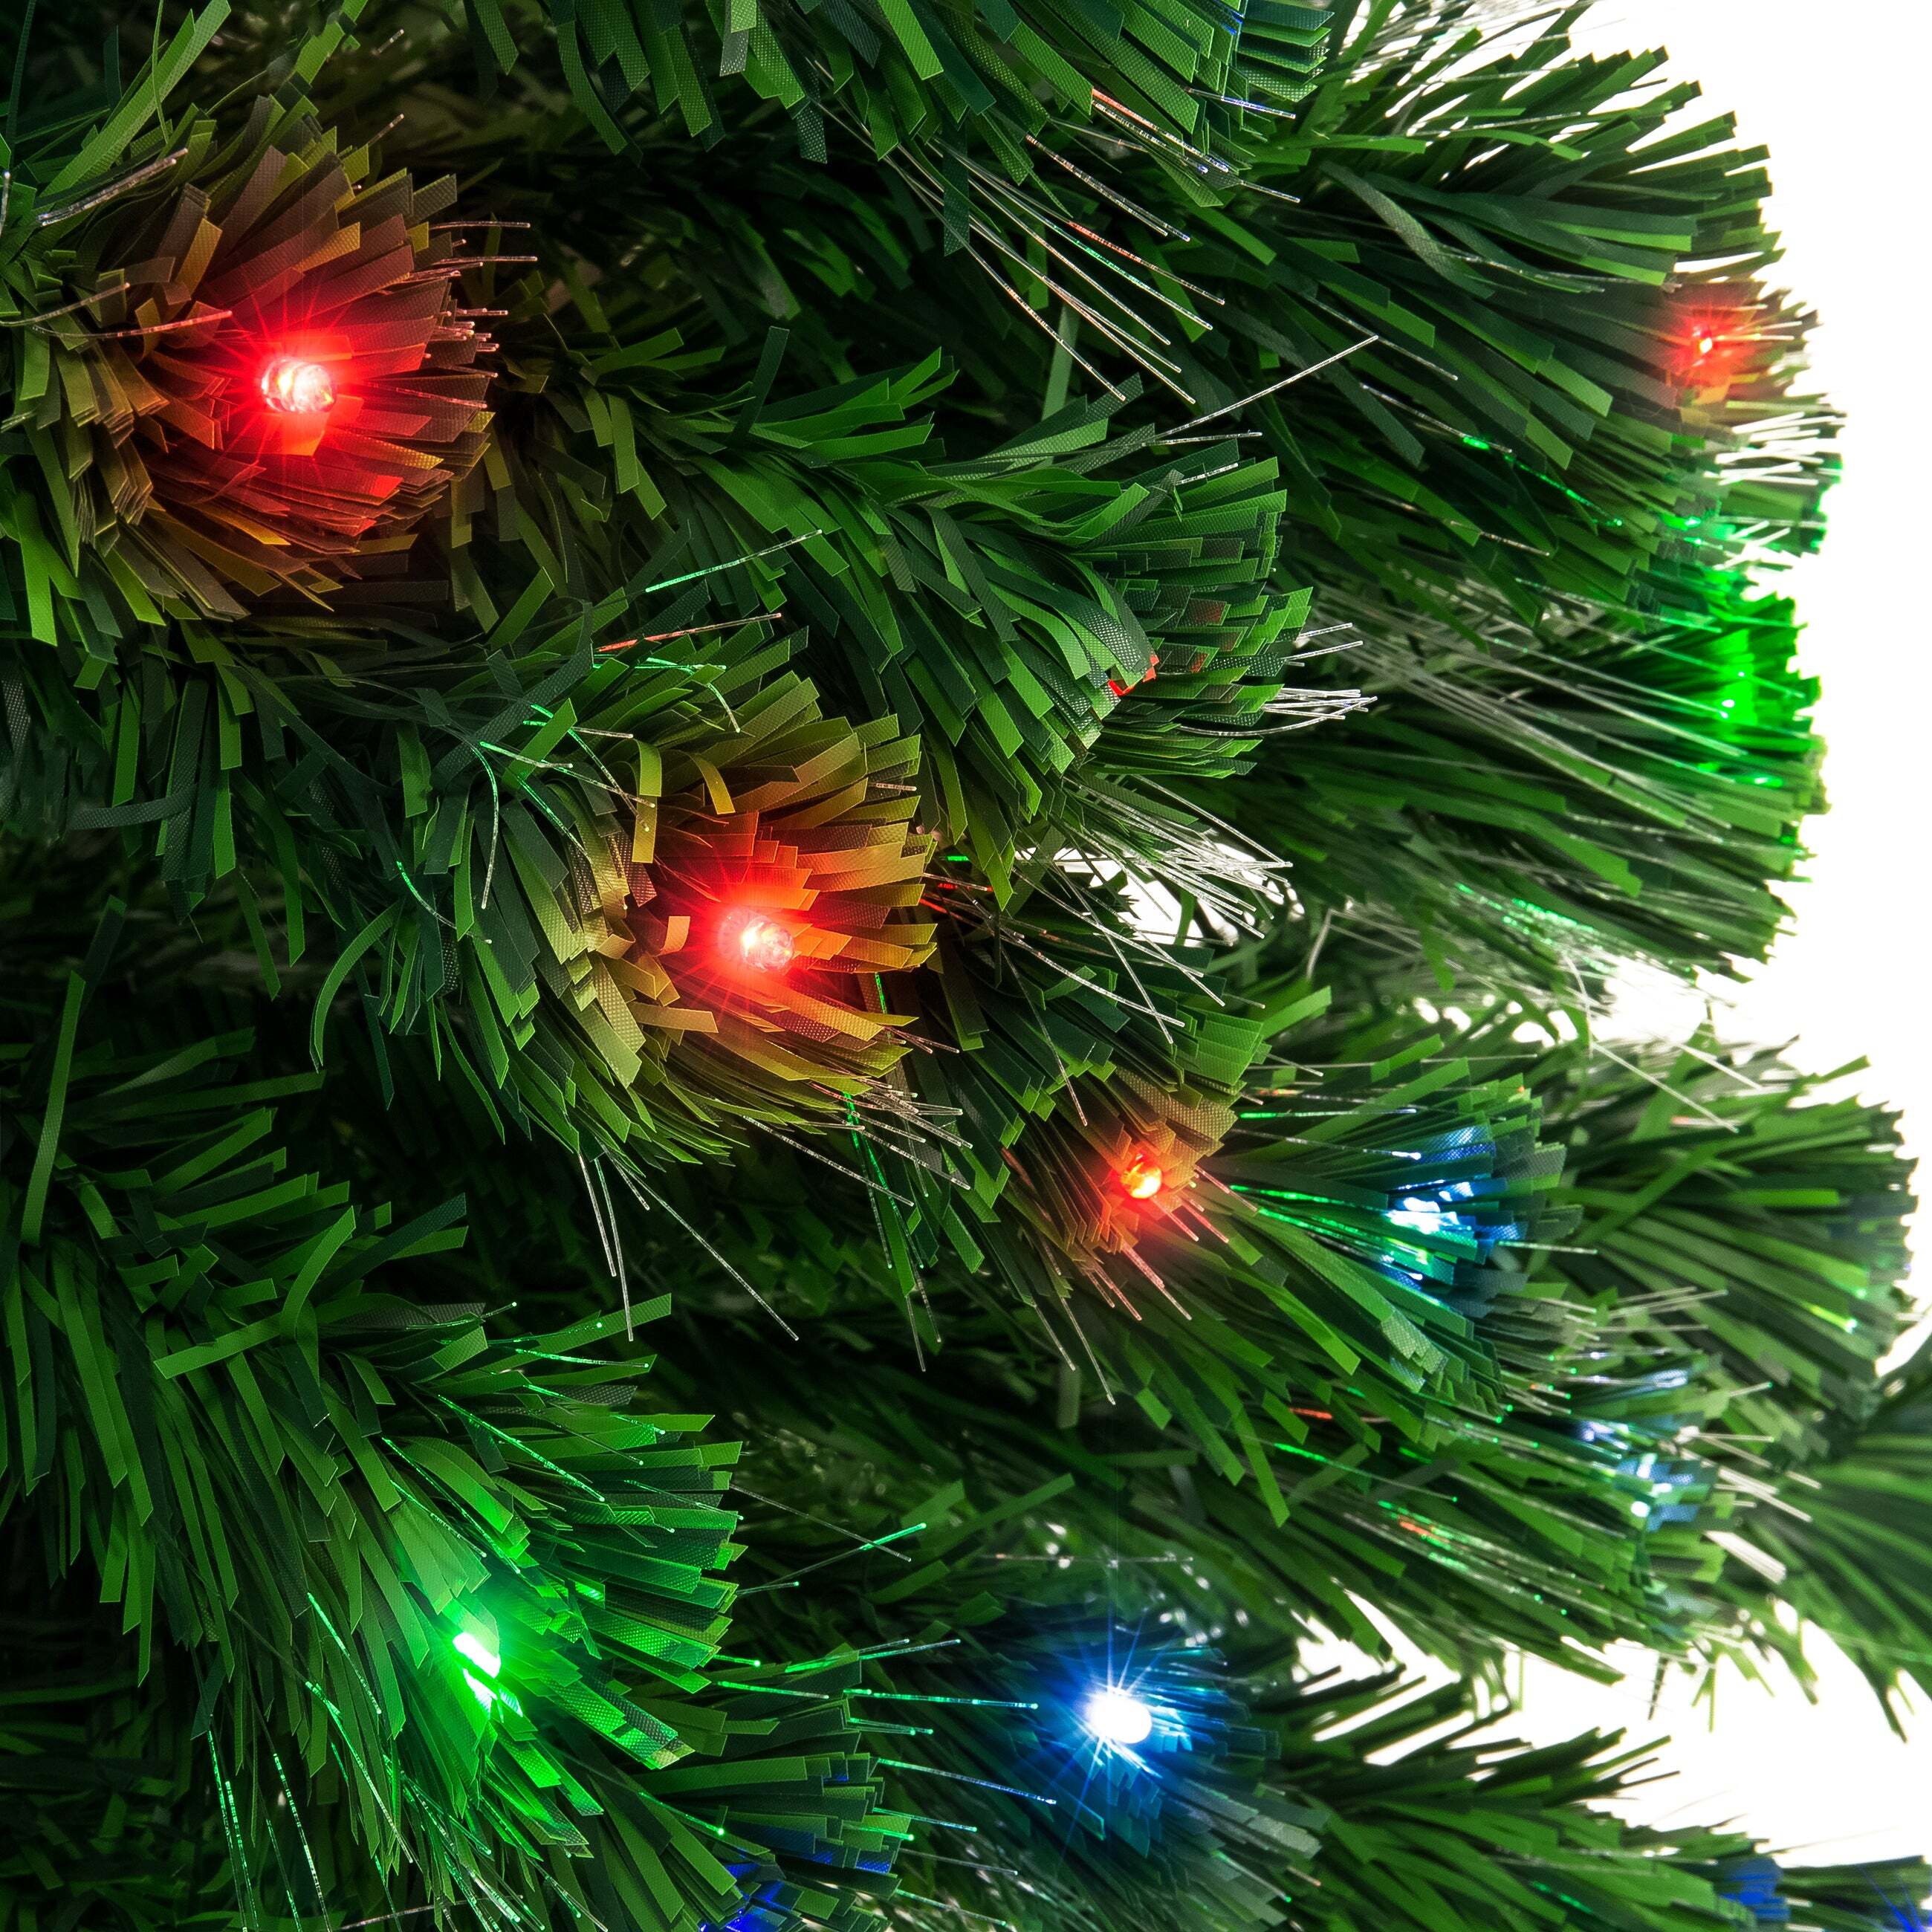 7ft Fiber Optic Artificial Christmas Pine Tree w/ 280 Lights, Stand